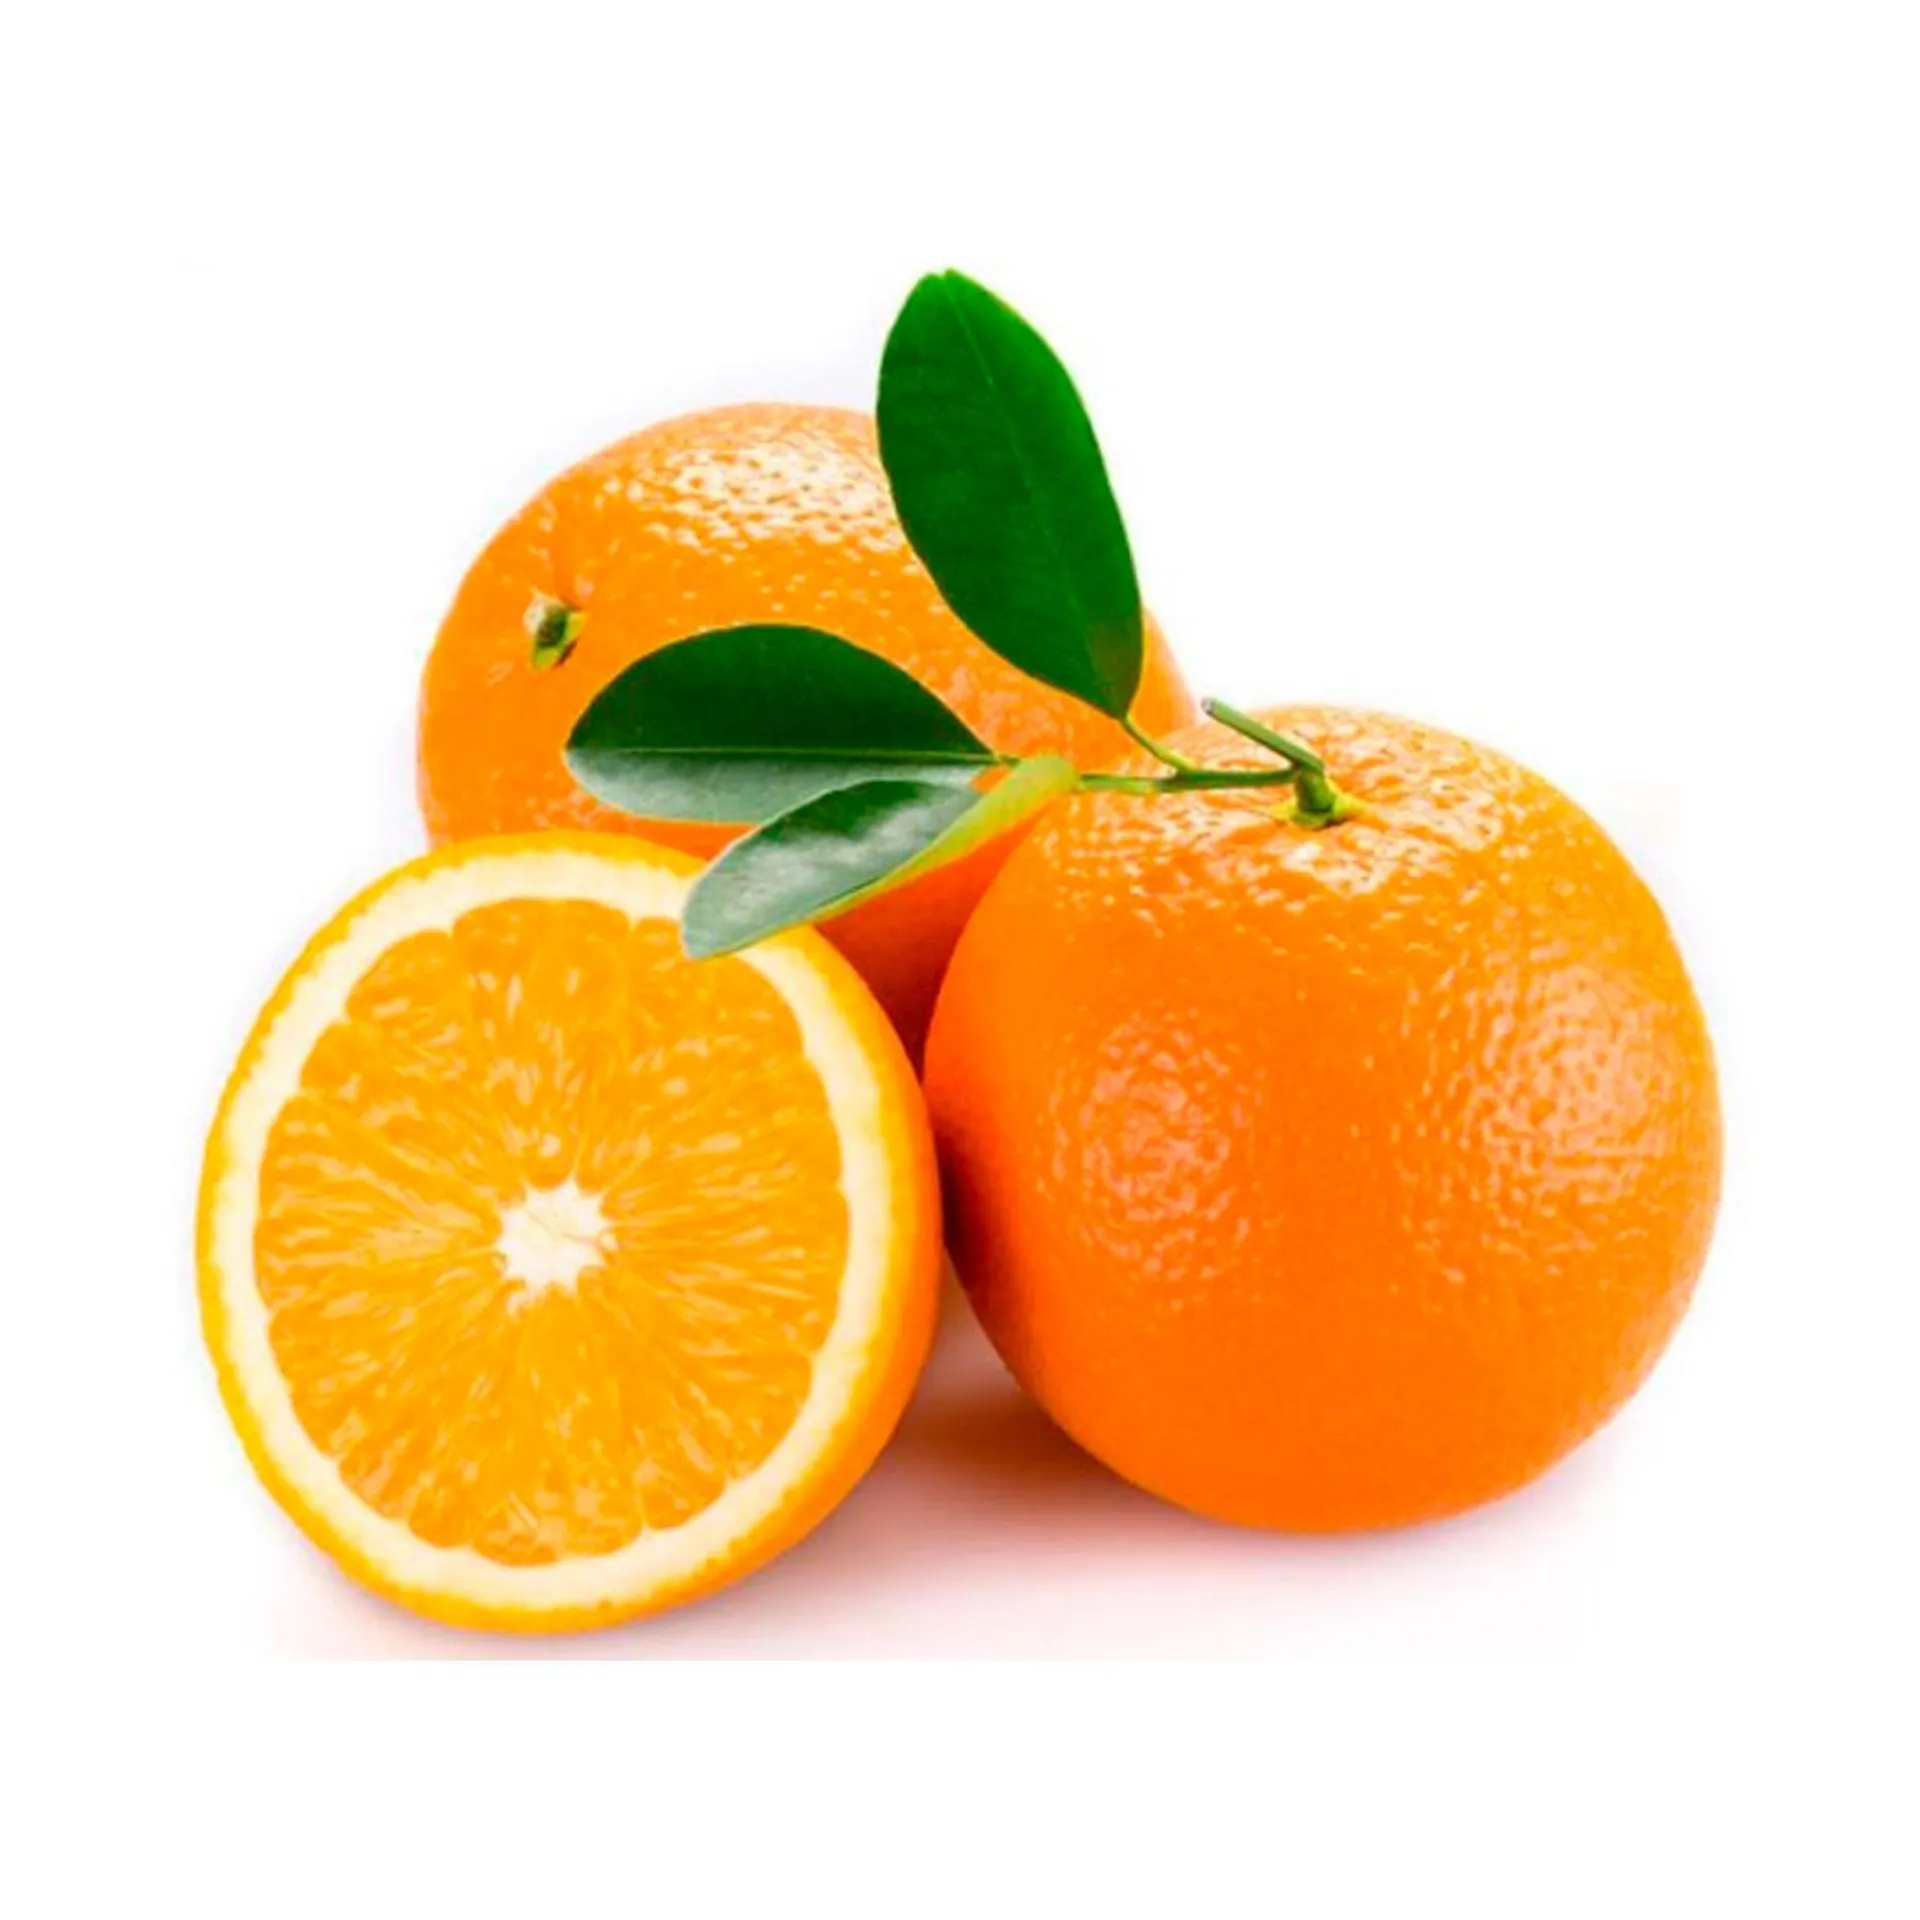 Naranja ombligo premiun x kg. - Carrefour - Las mejores ofertas en supermercados